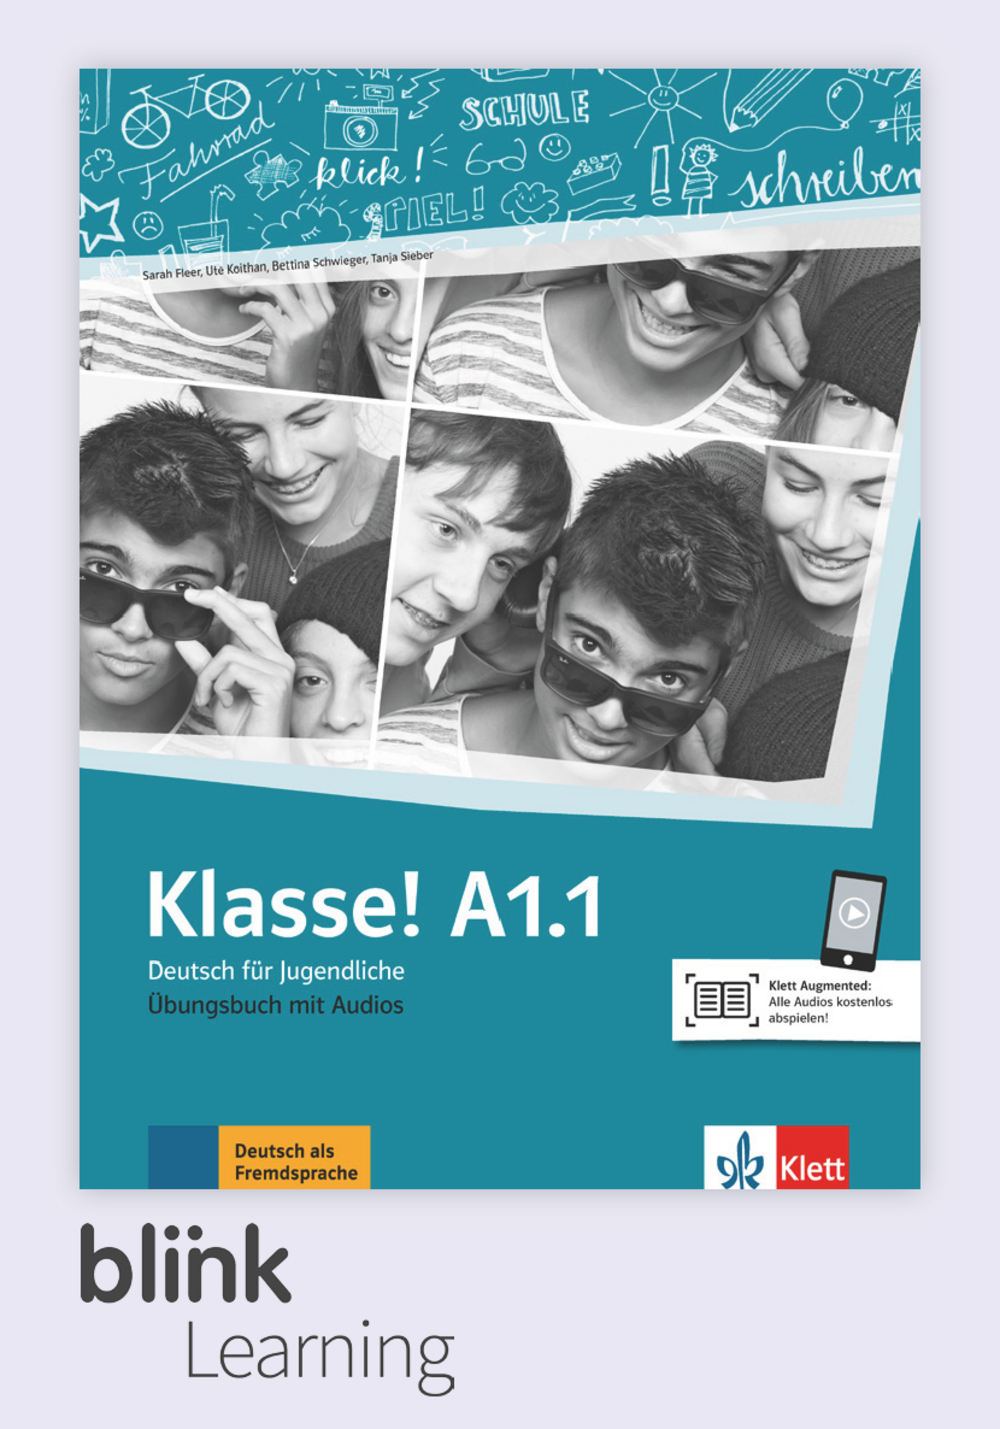 Klasse! A1.1 Digital Ubungsbuch fur Lernende / Цифровая рабочая тетрадь для ученика